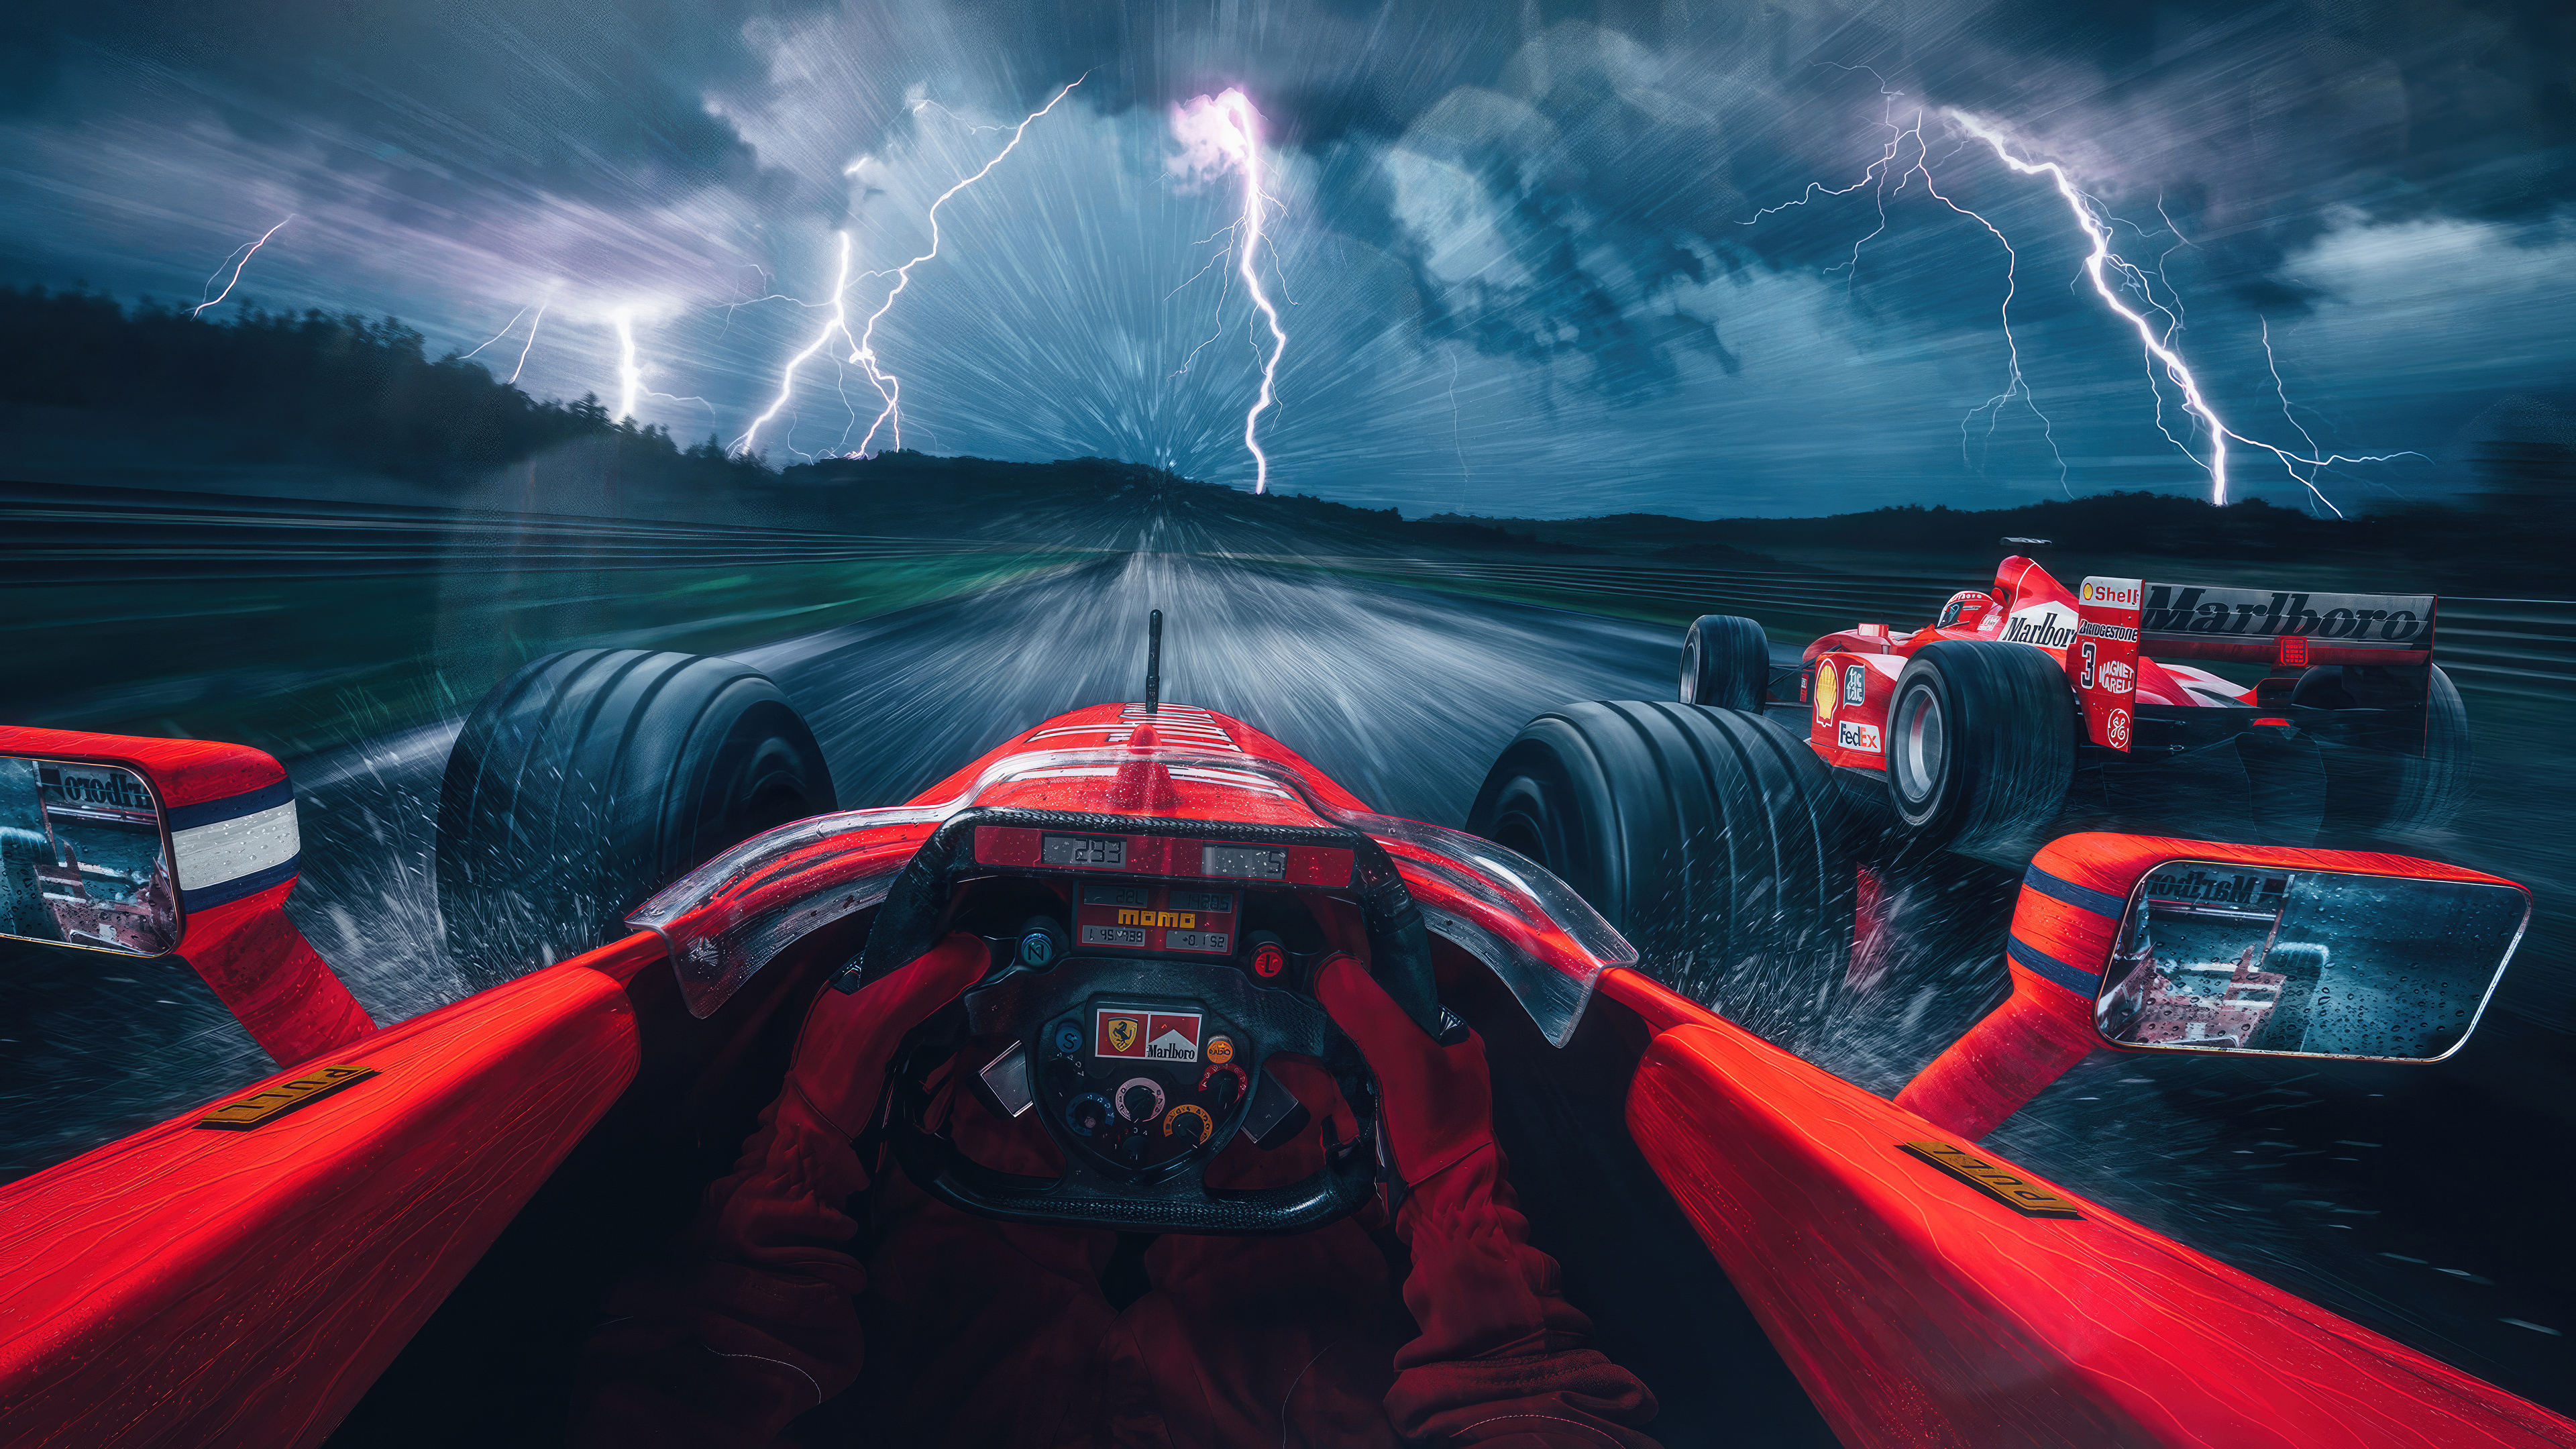 Ferrari F1 4k HD Wallpaper Image Background